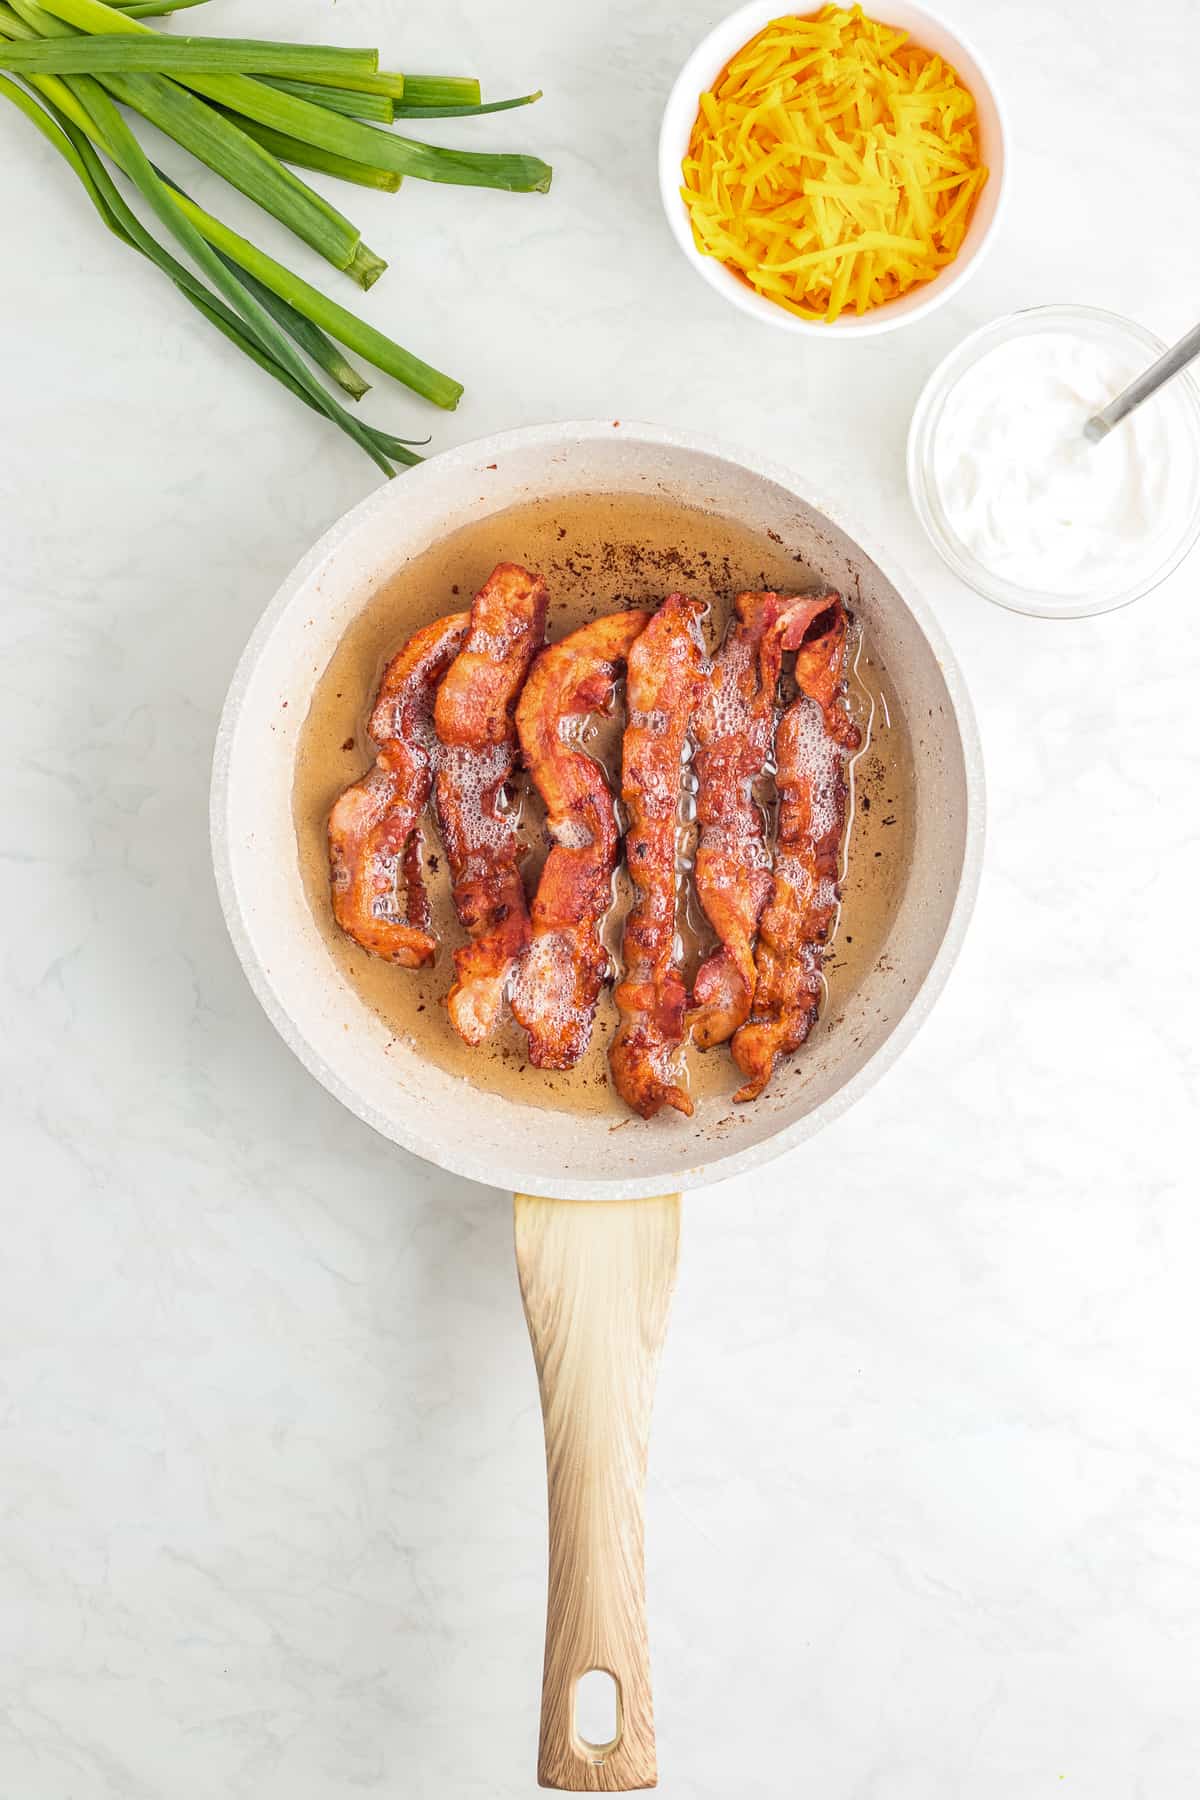 Fried Bacon in skillet